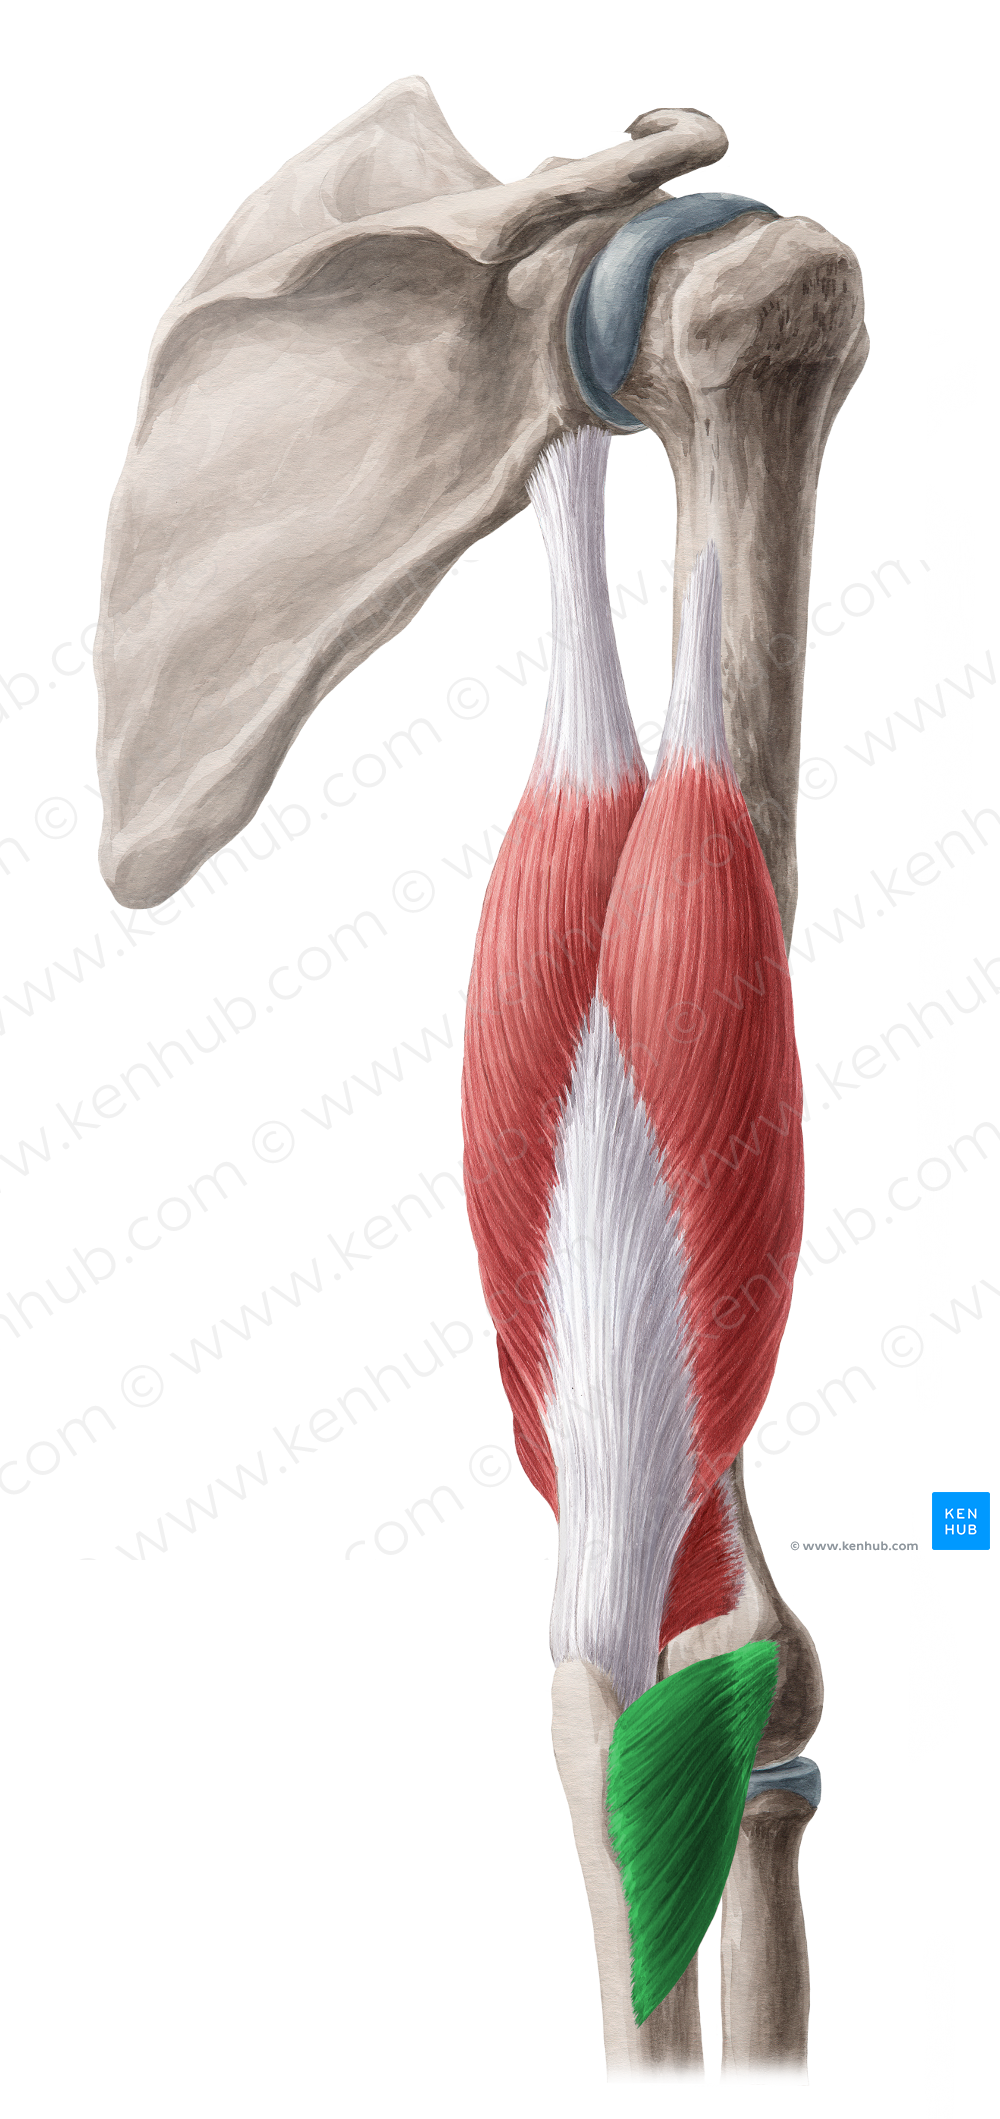 Anconeus muscle (#5199)